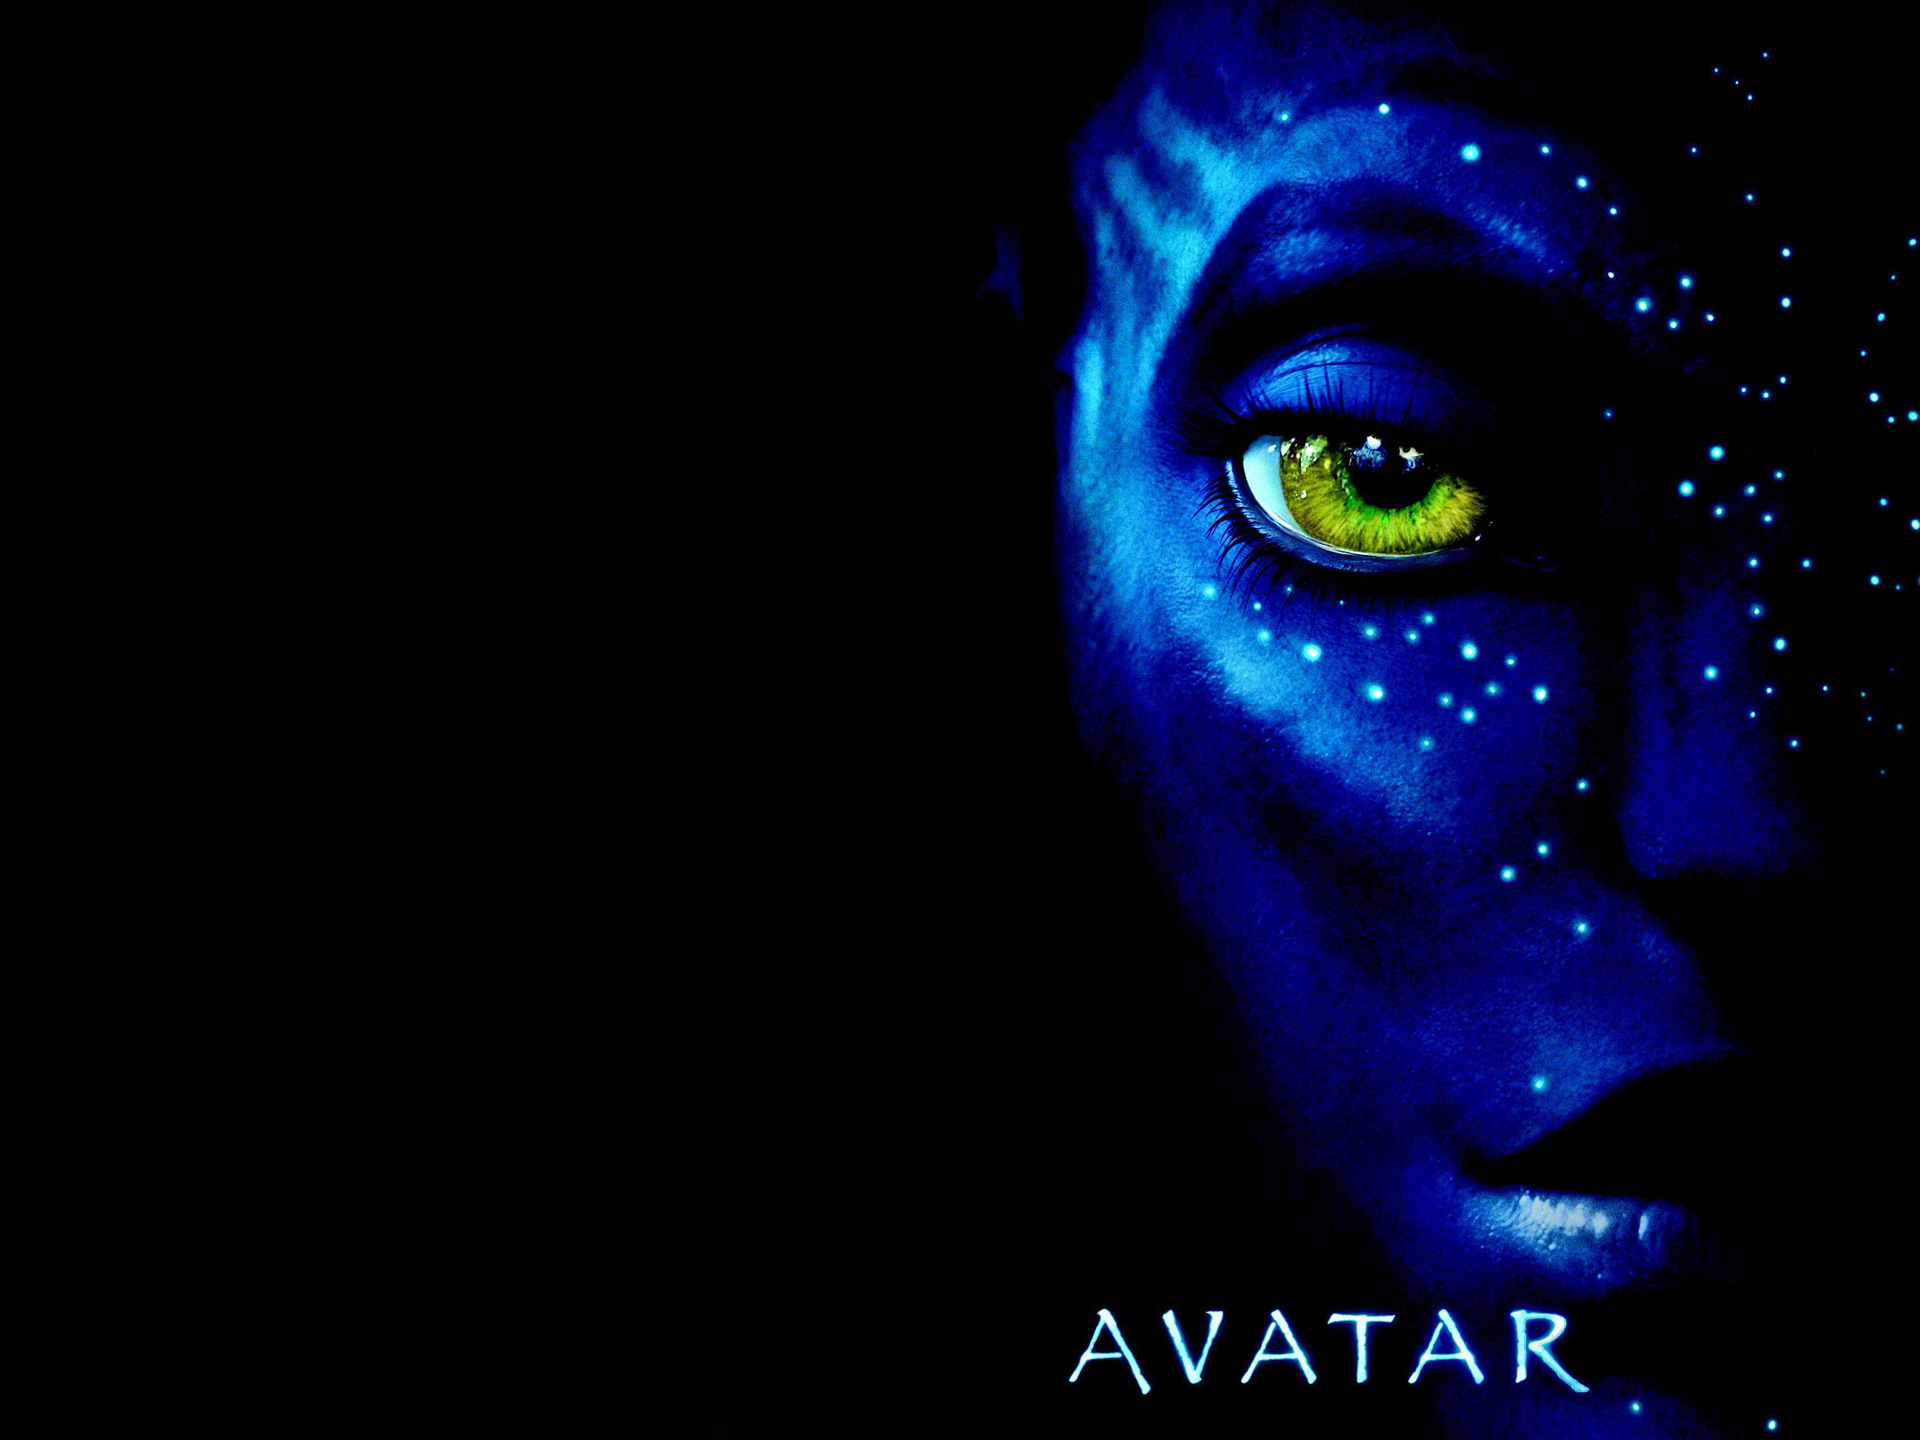 Official Avatar Movie Poster Wallpaper HD